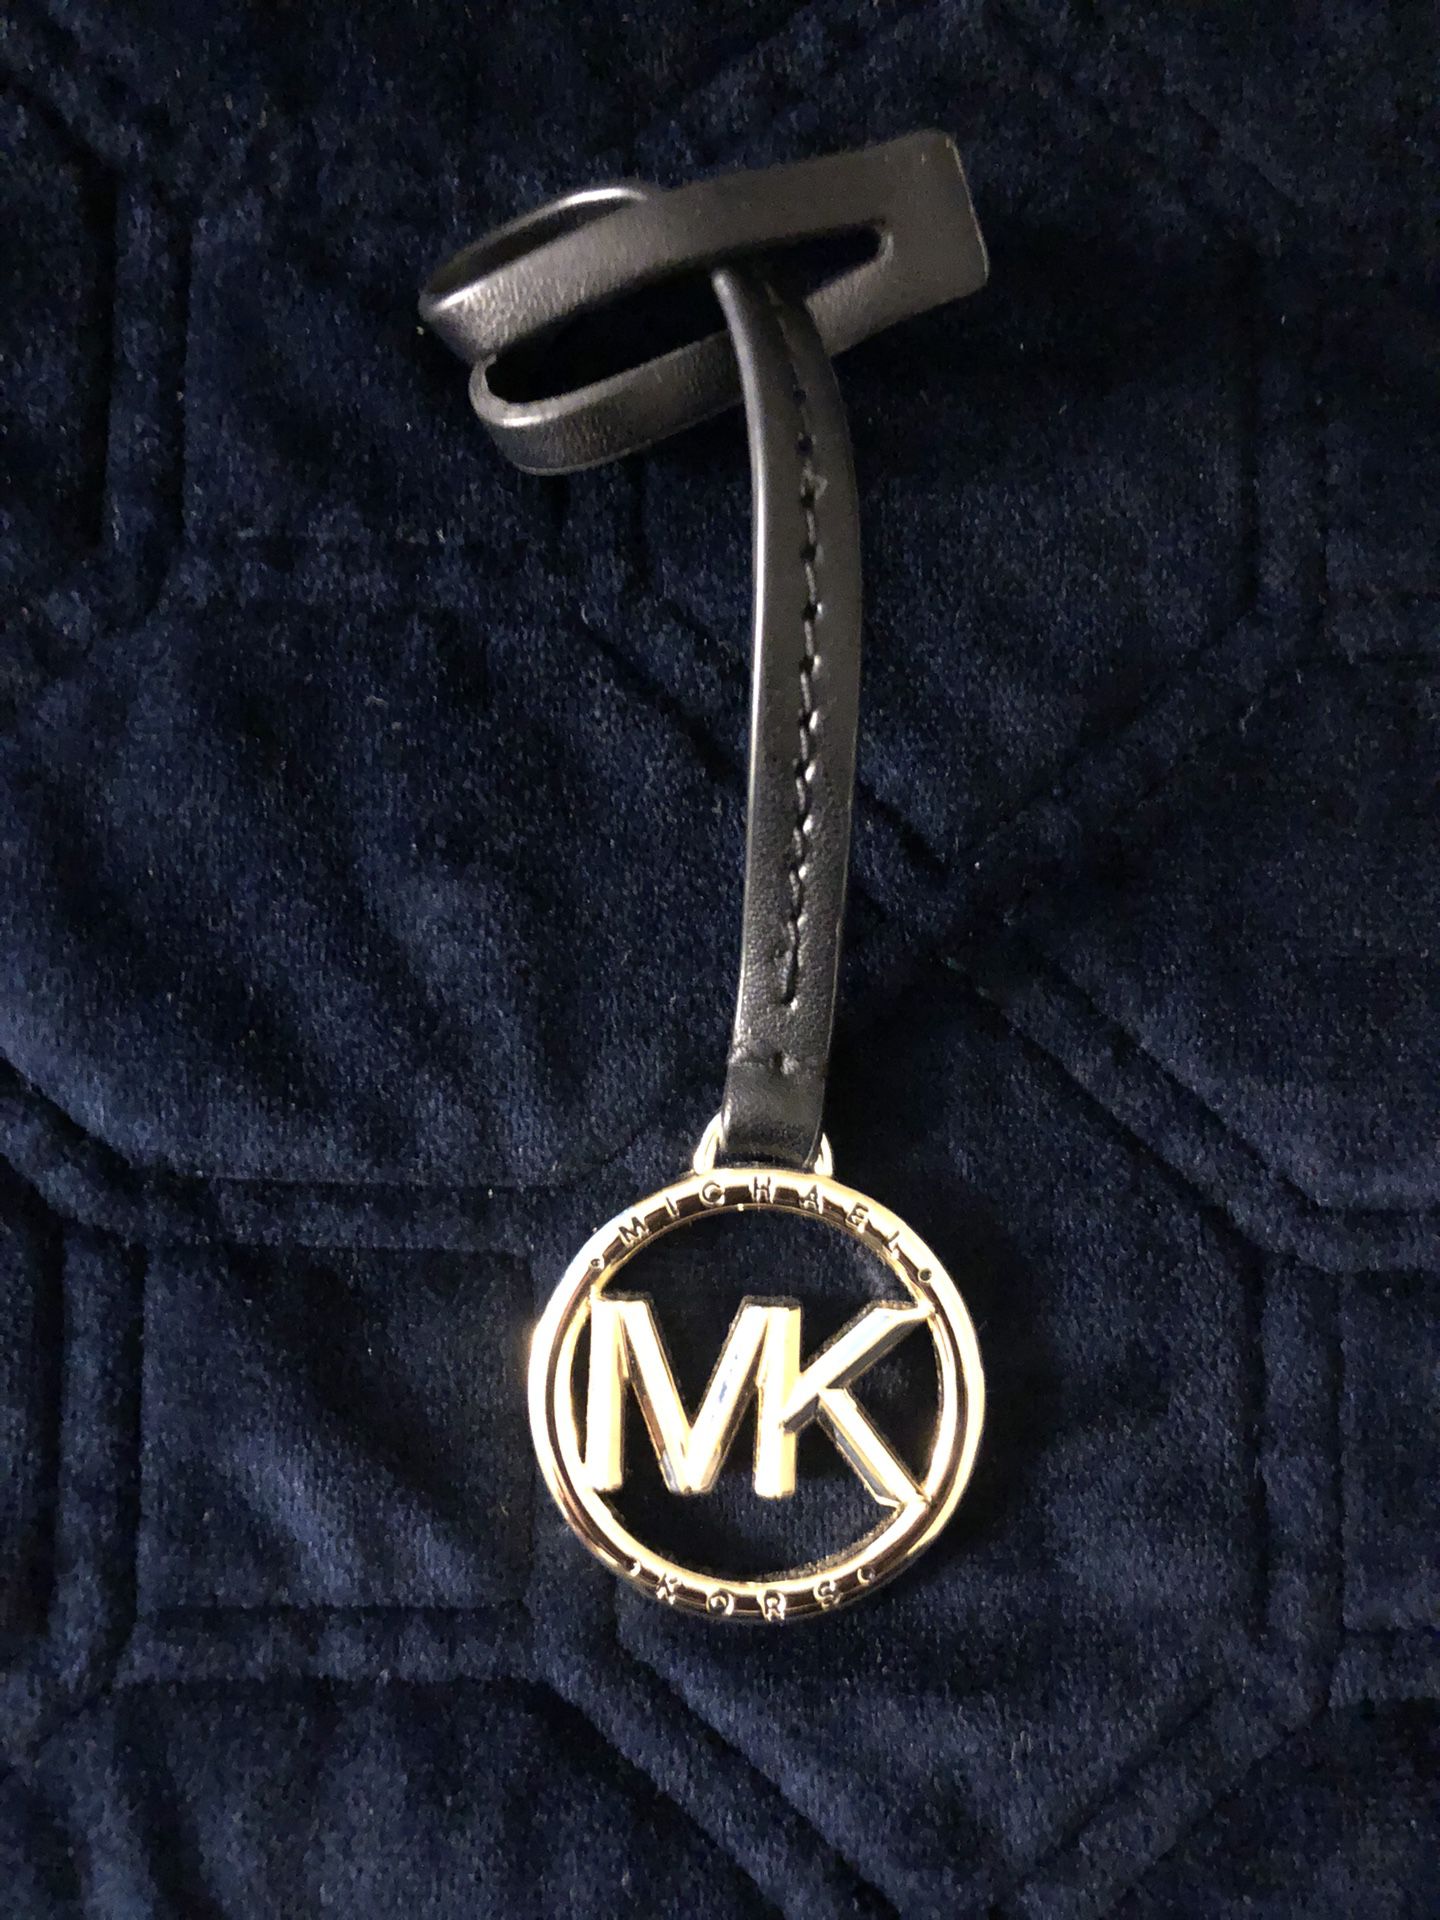 Michael Kors MK Round Gold Black Leather Hang Tag Keychain Bag FOB Purse Charm